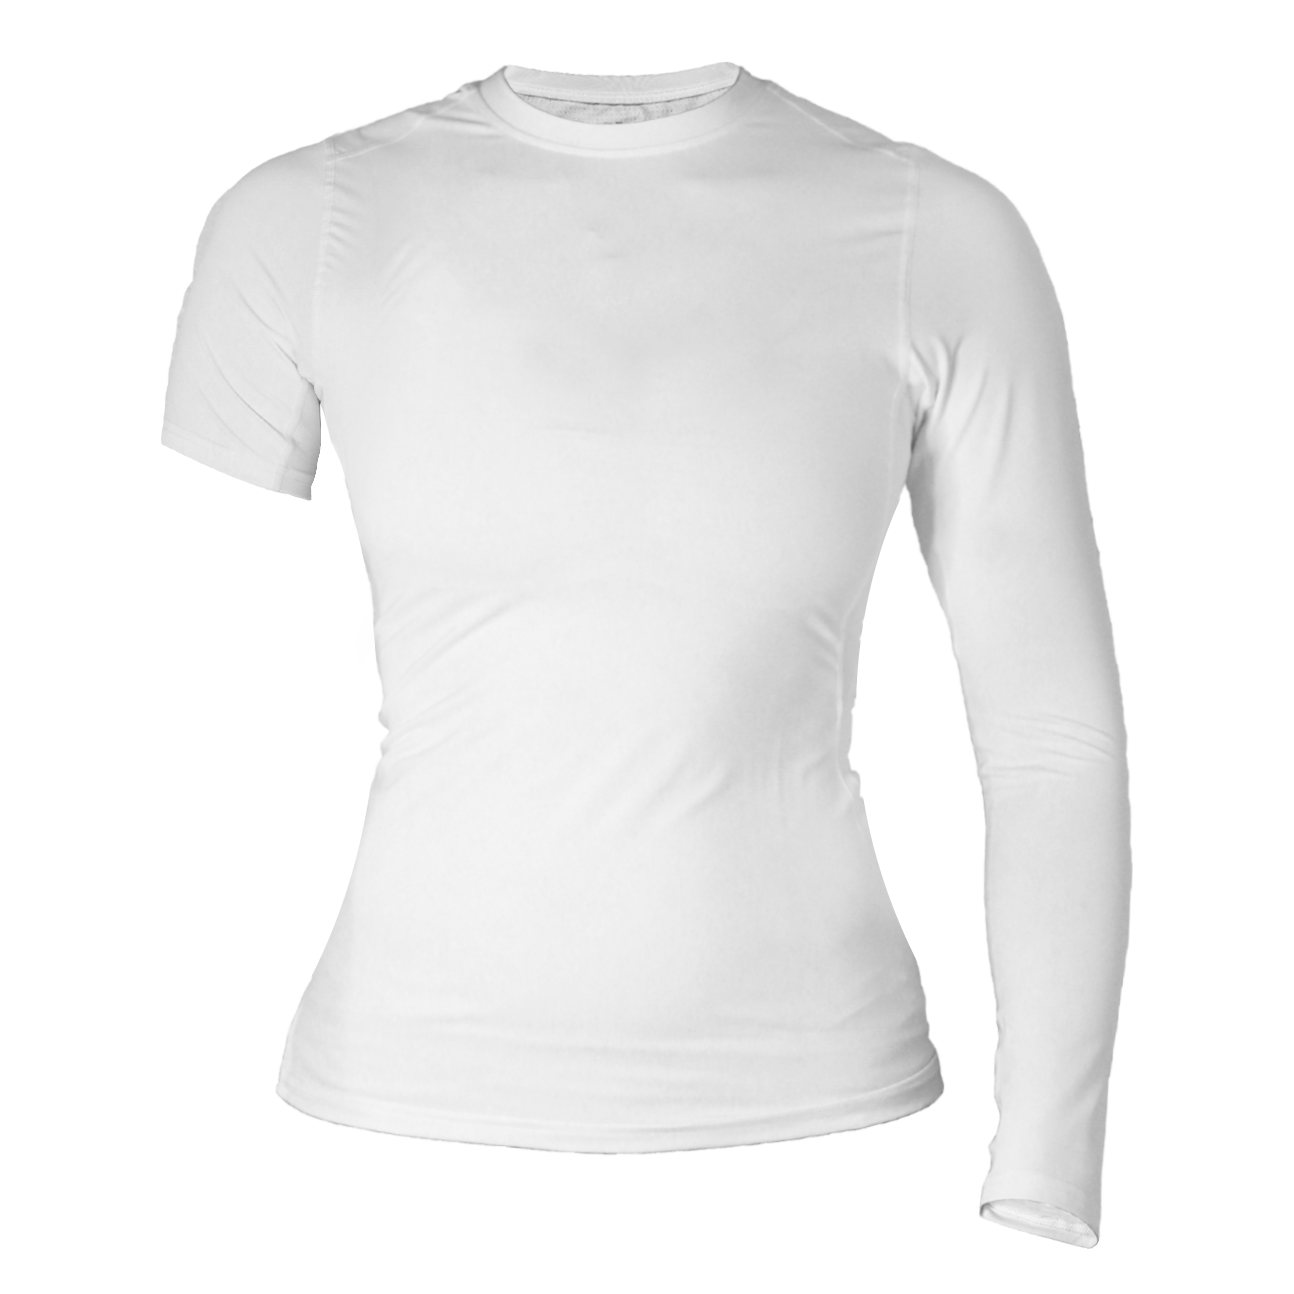 Women's Ace Compression Shirt - Short Sleeve